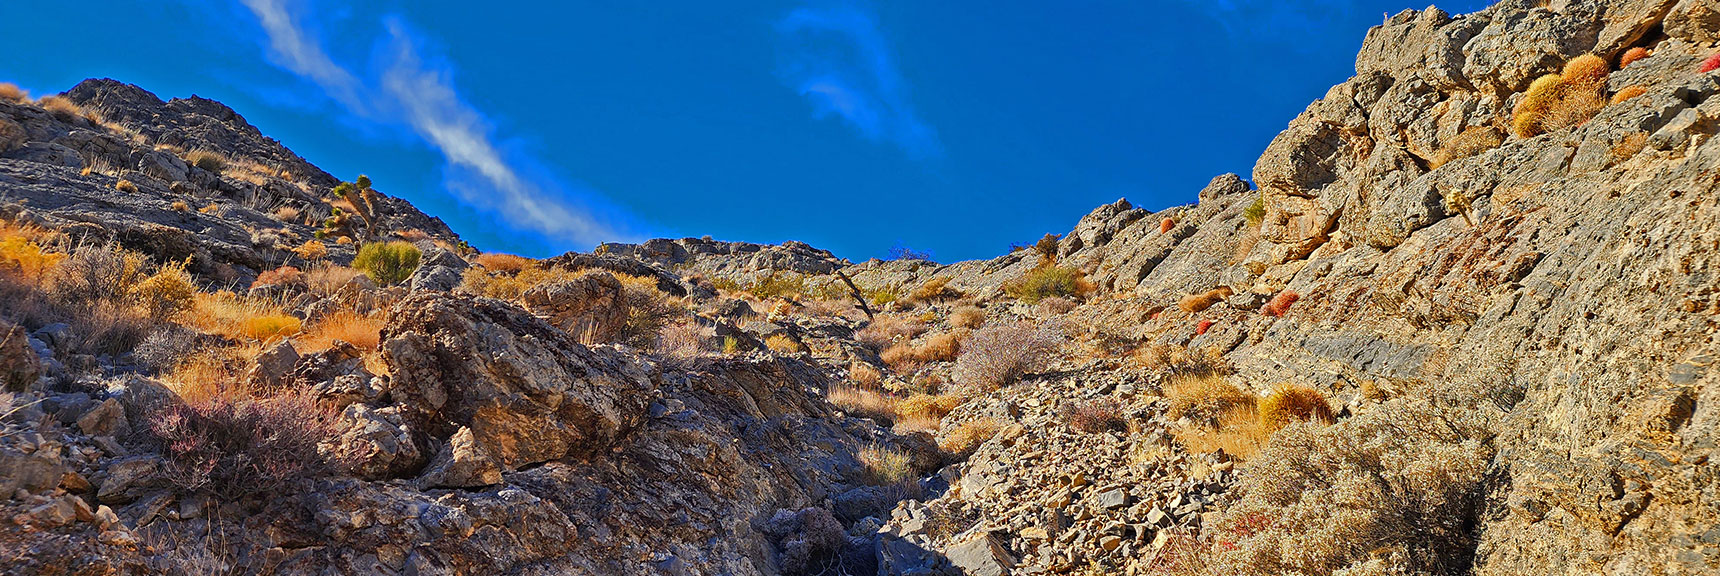 Continuing to Ascend Gully. Nearing the Ridgeline Summit. | Fossil Ridge Far East | Desert National Wildlife Refuge, Nevada